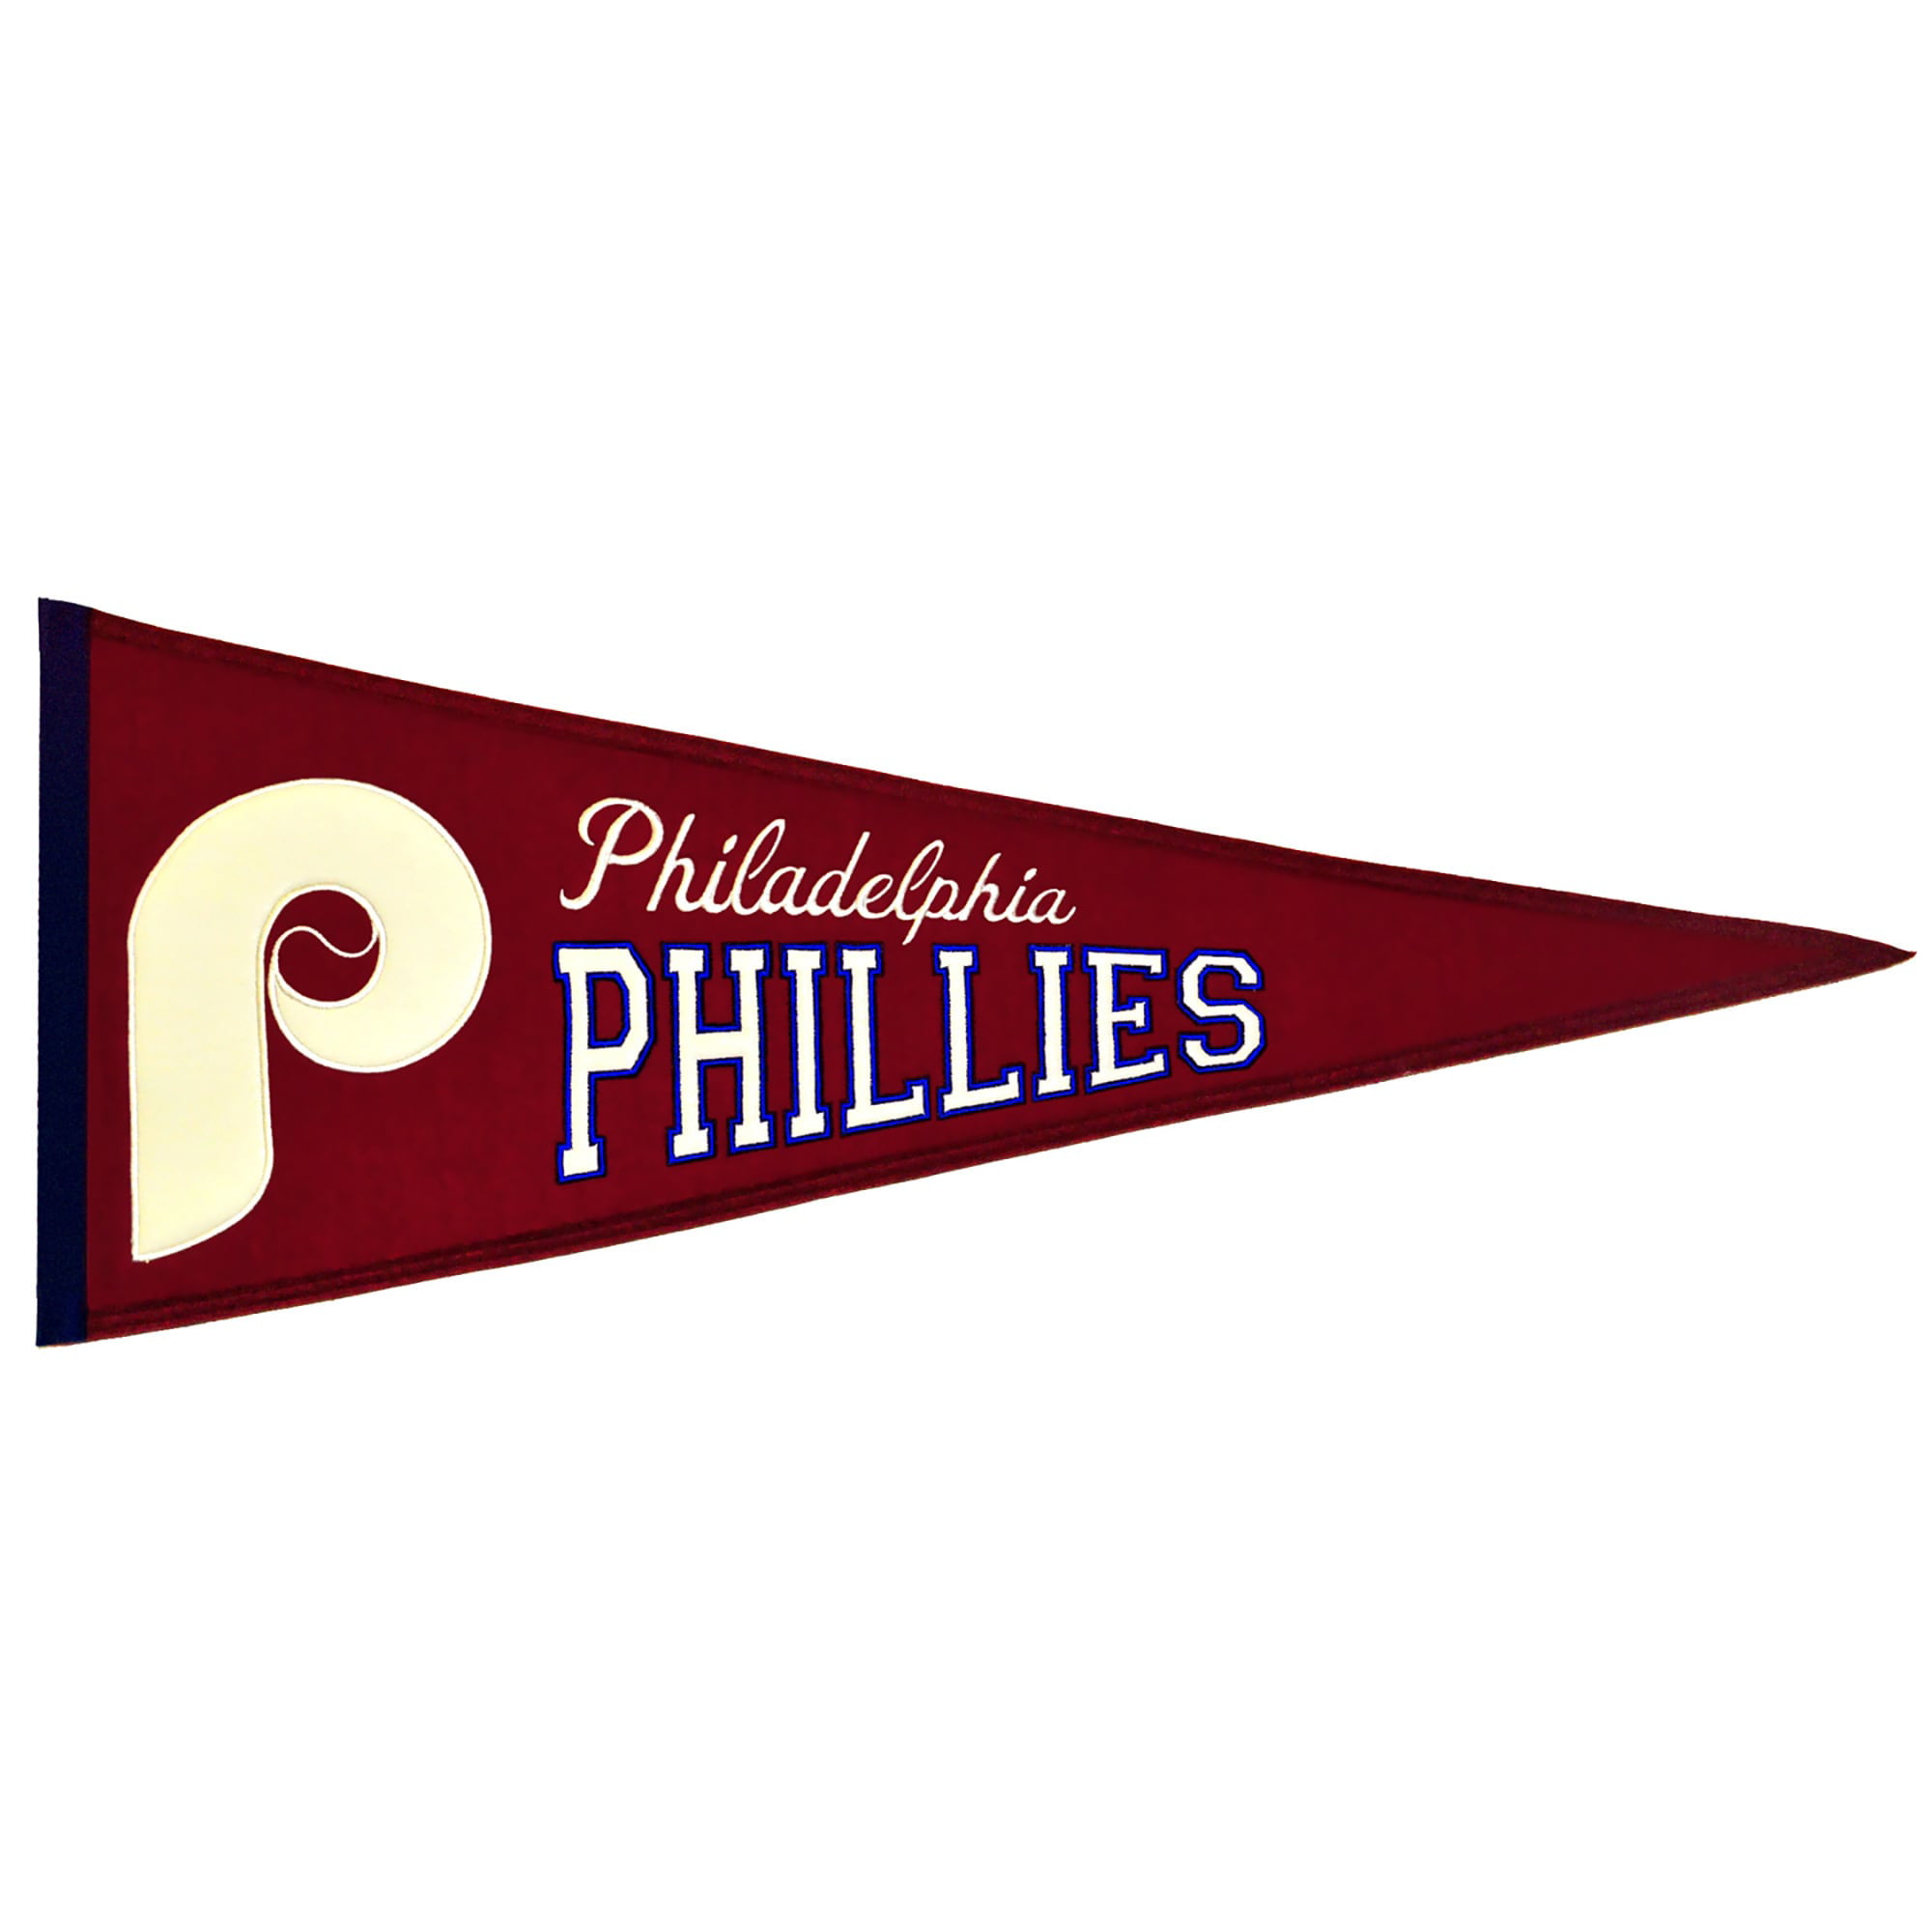 Philadelphia Phillies MLB Cooperstown Pennant (13x32)